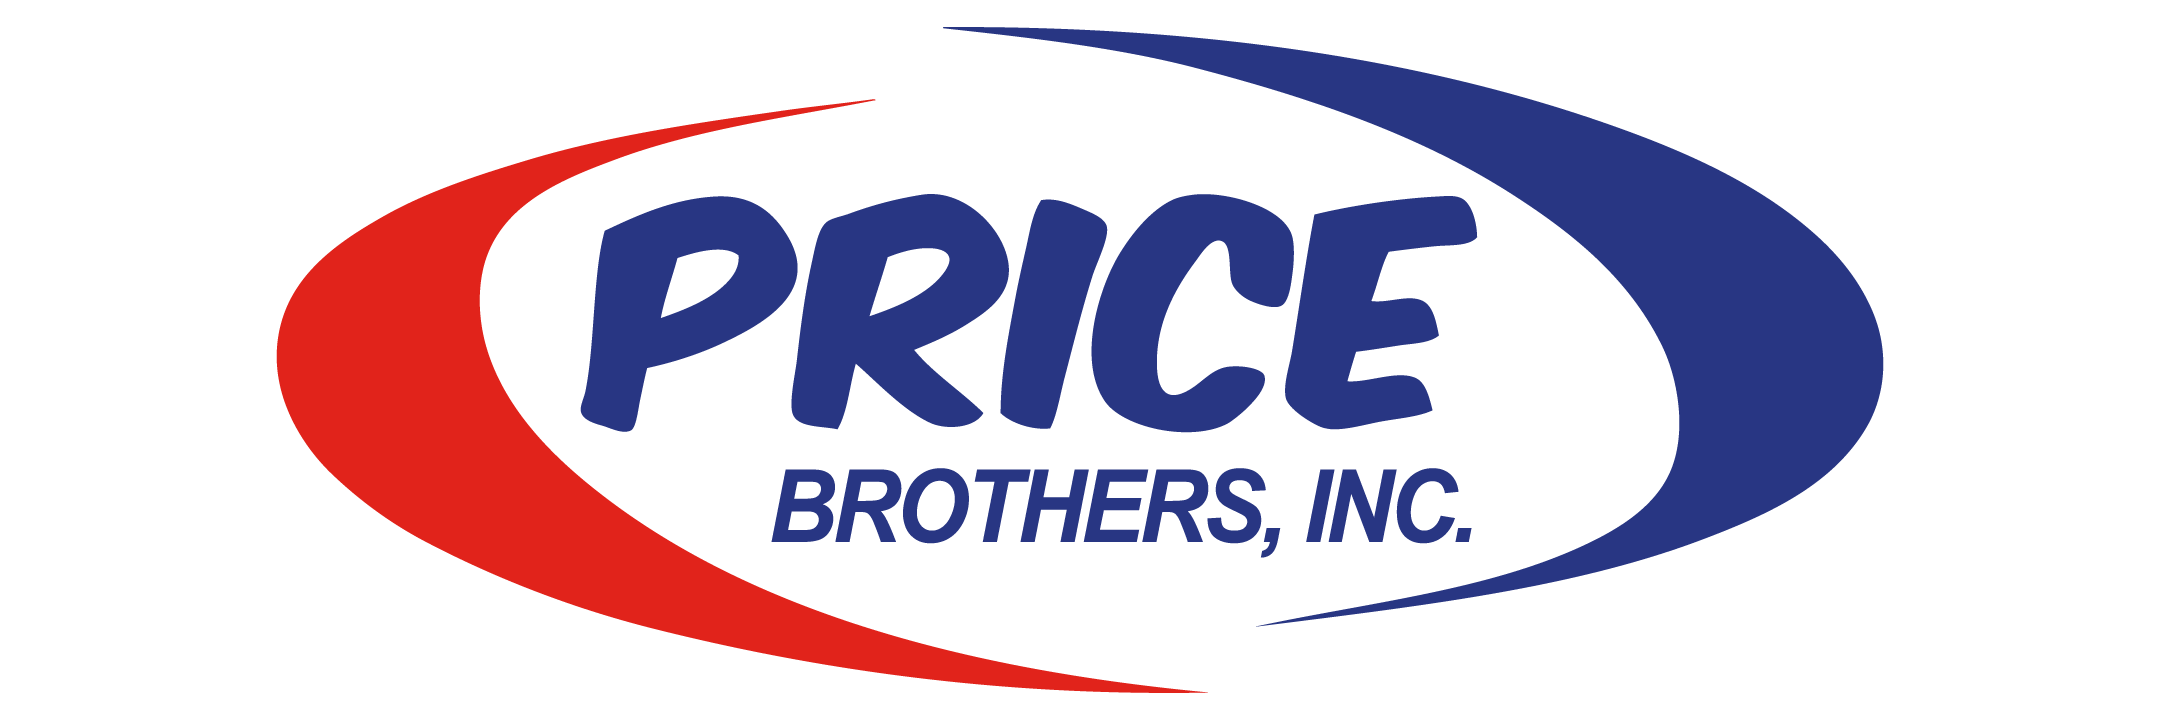 C. Price Brothers (Tier 4)